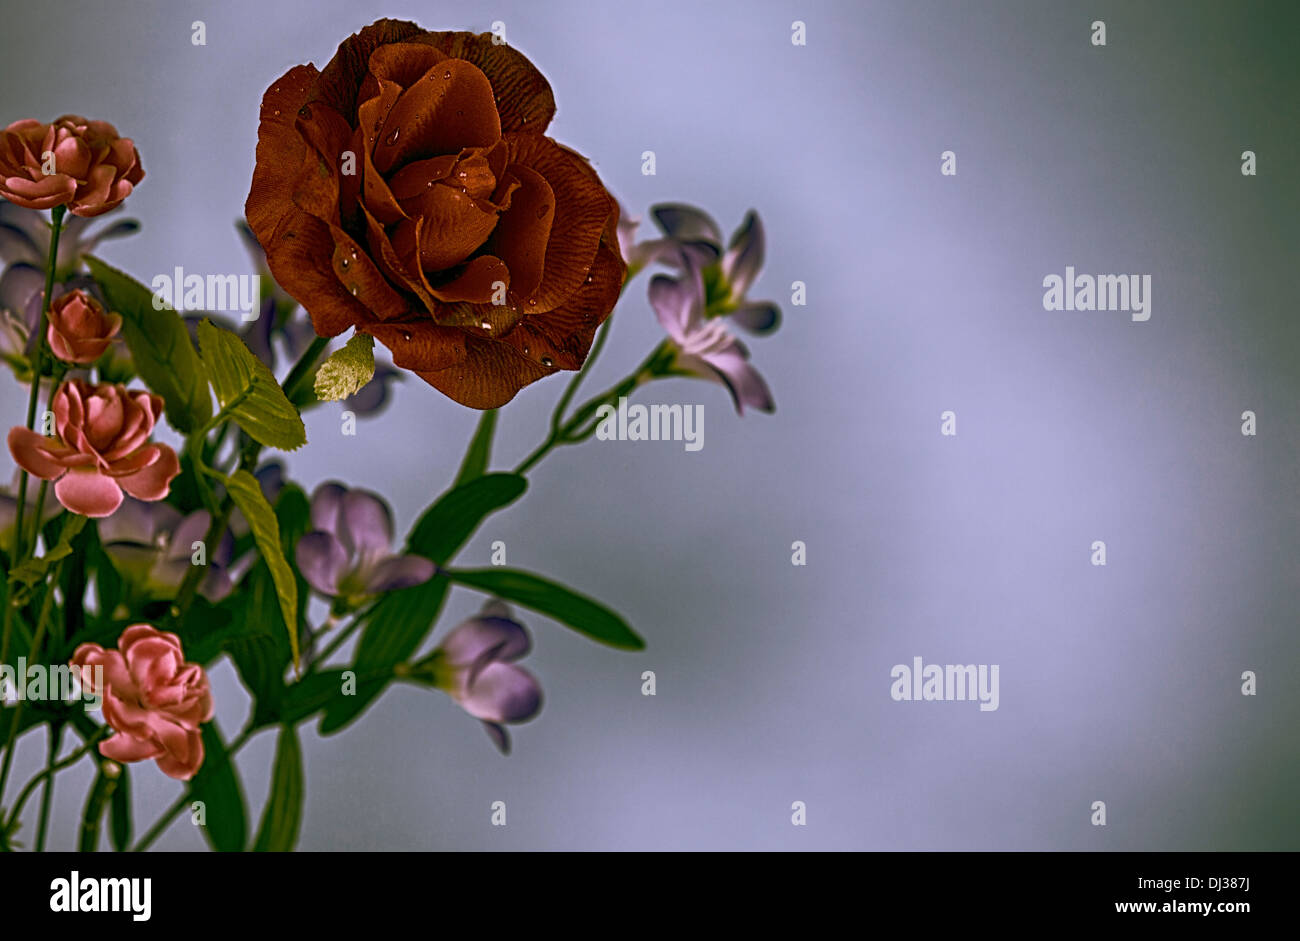 Fiore fiori rosa rose rosa rosso porpora Foto stock - Alamy